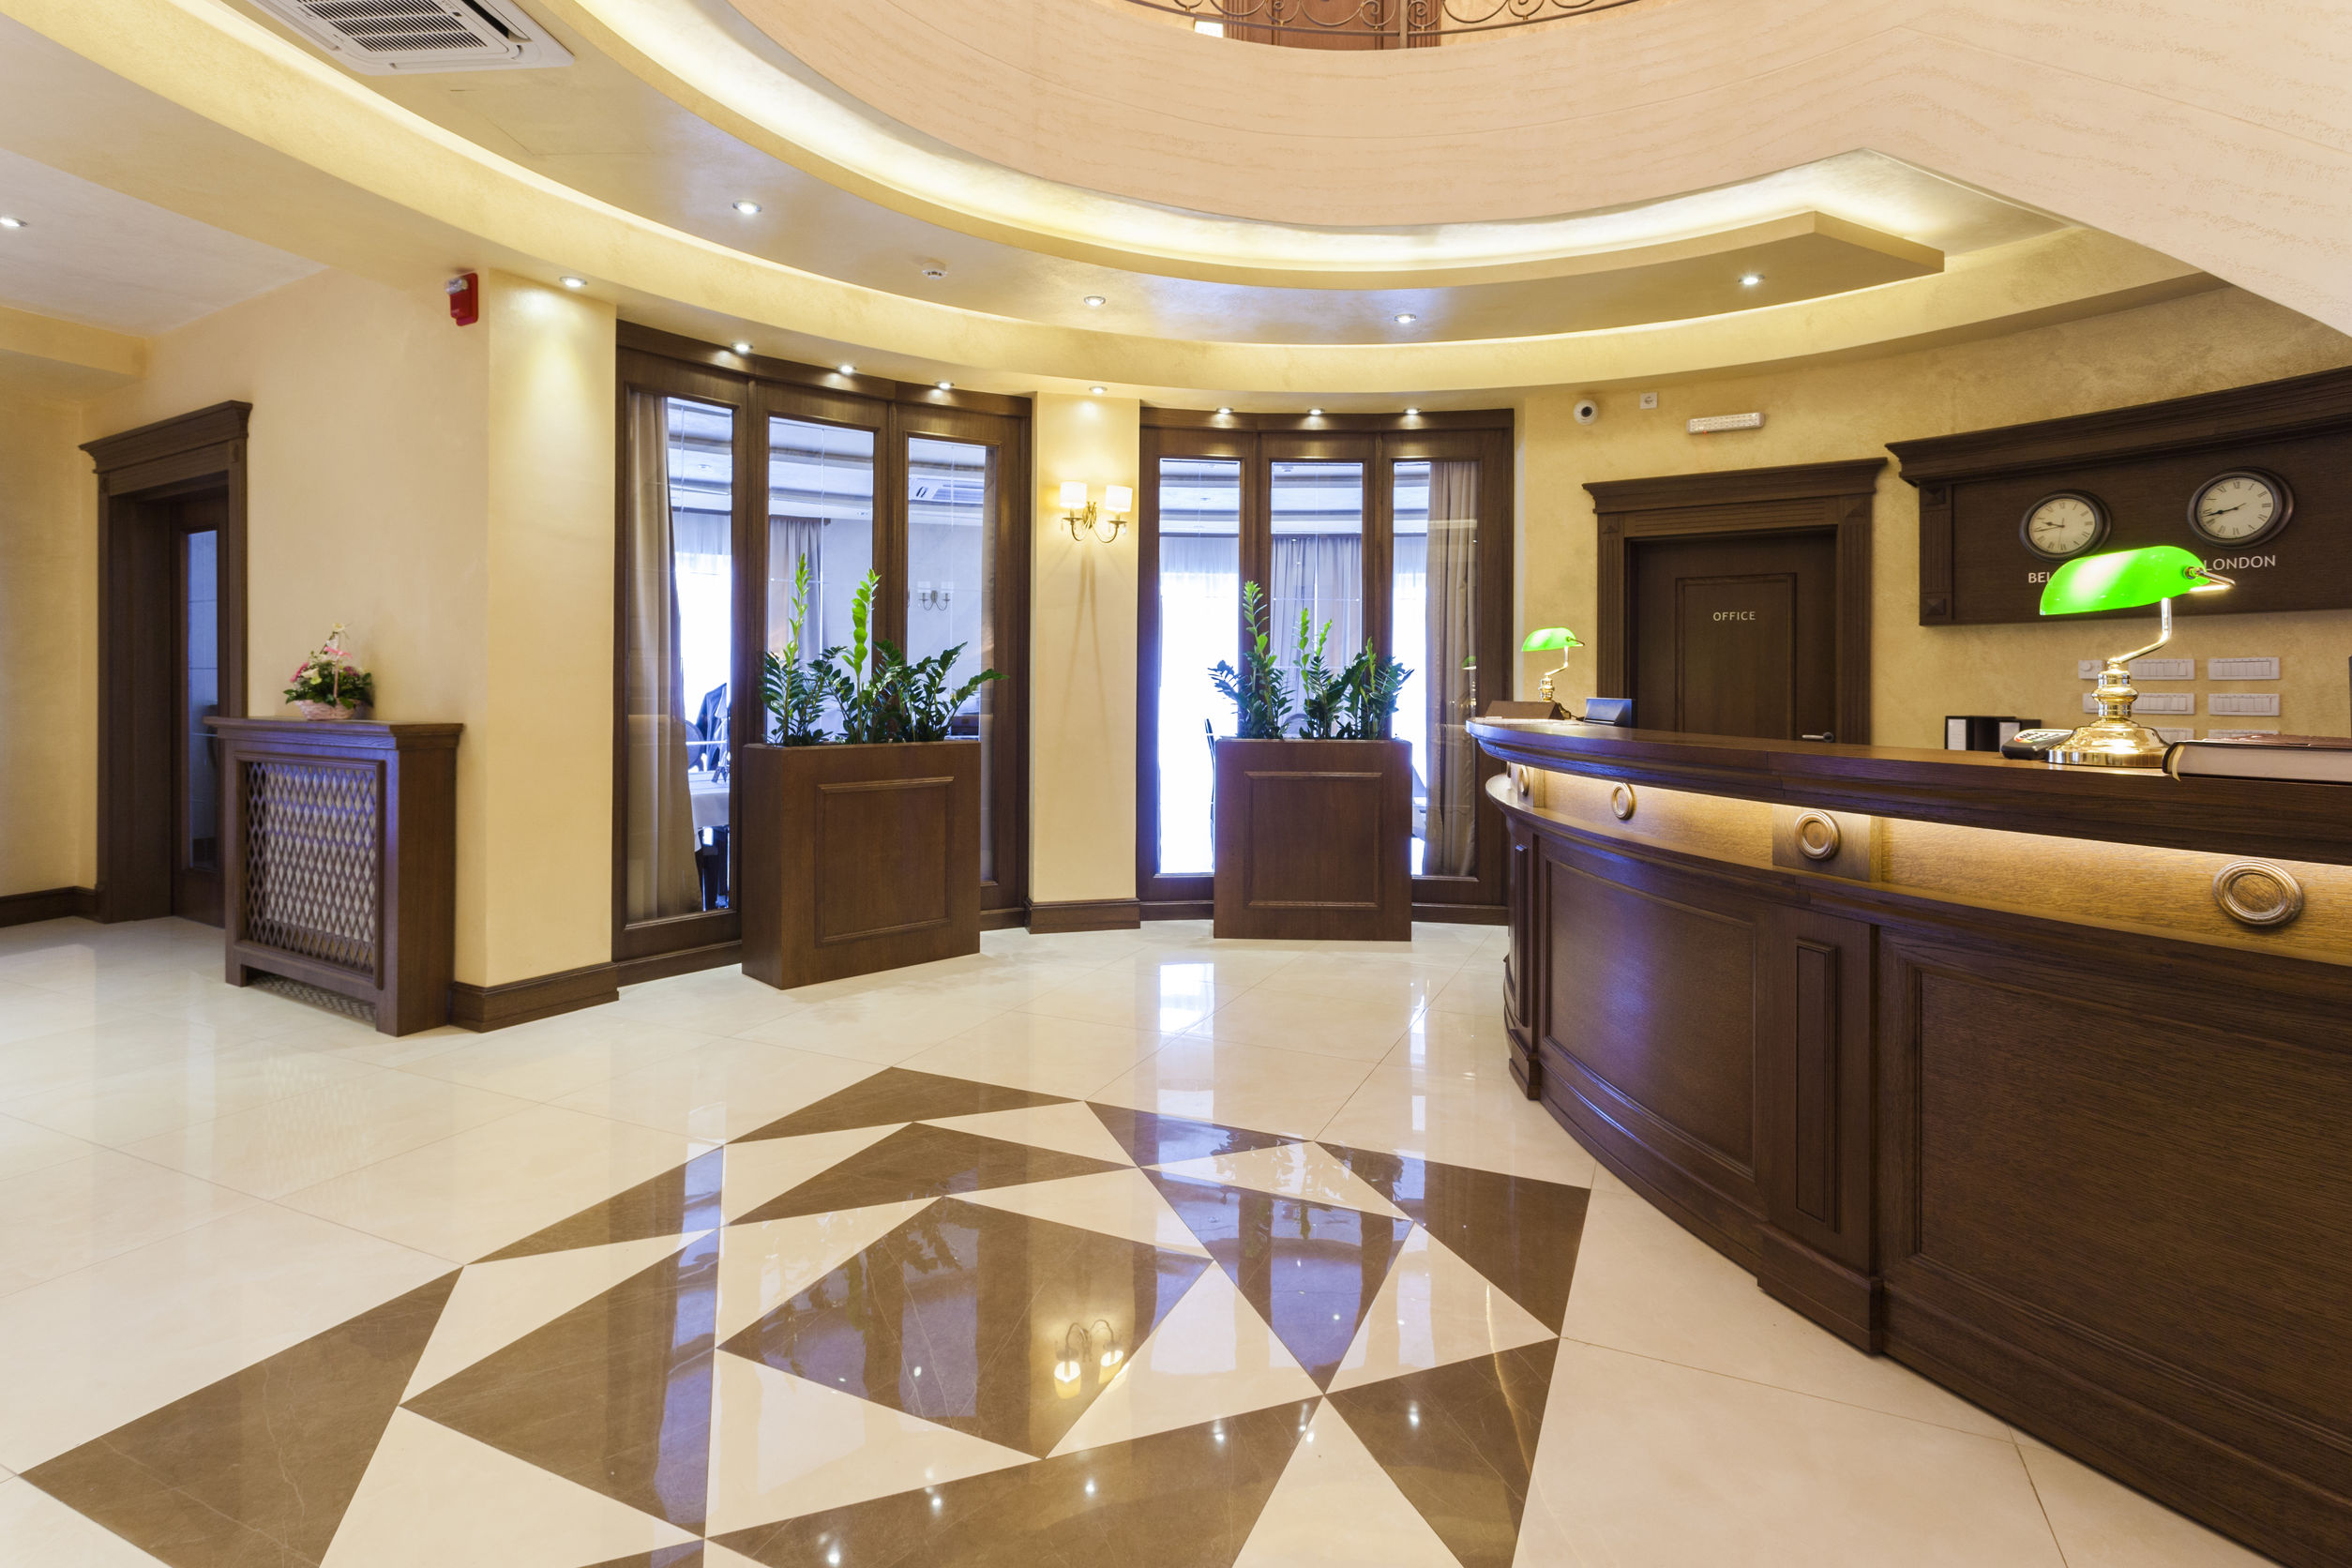 29753084 - luxury hotel lobby with reception desk